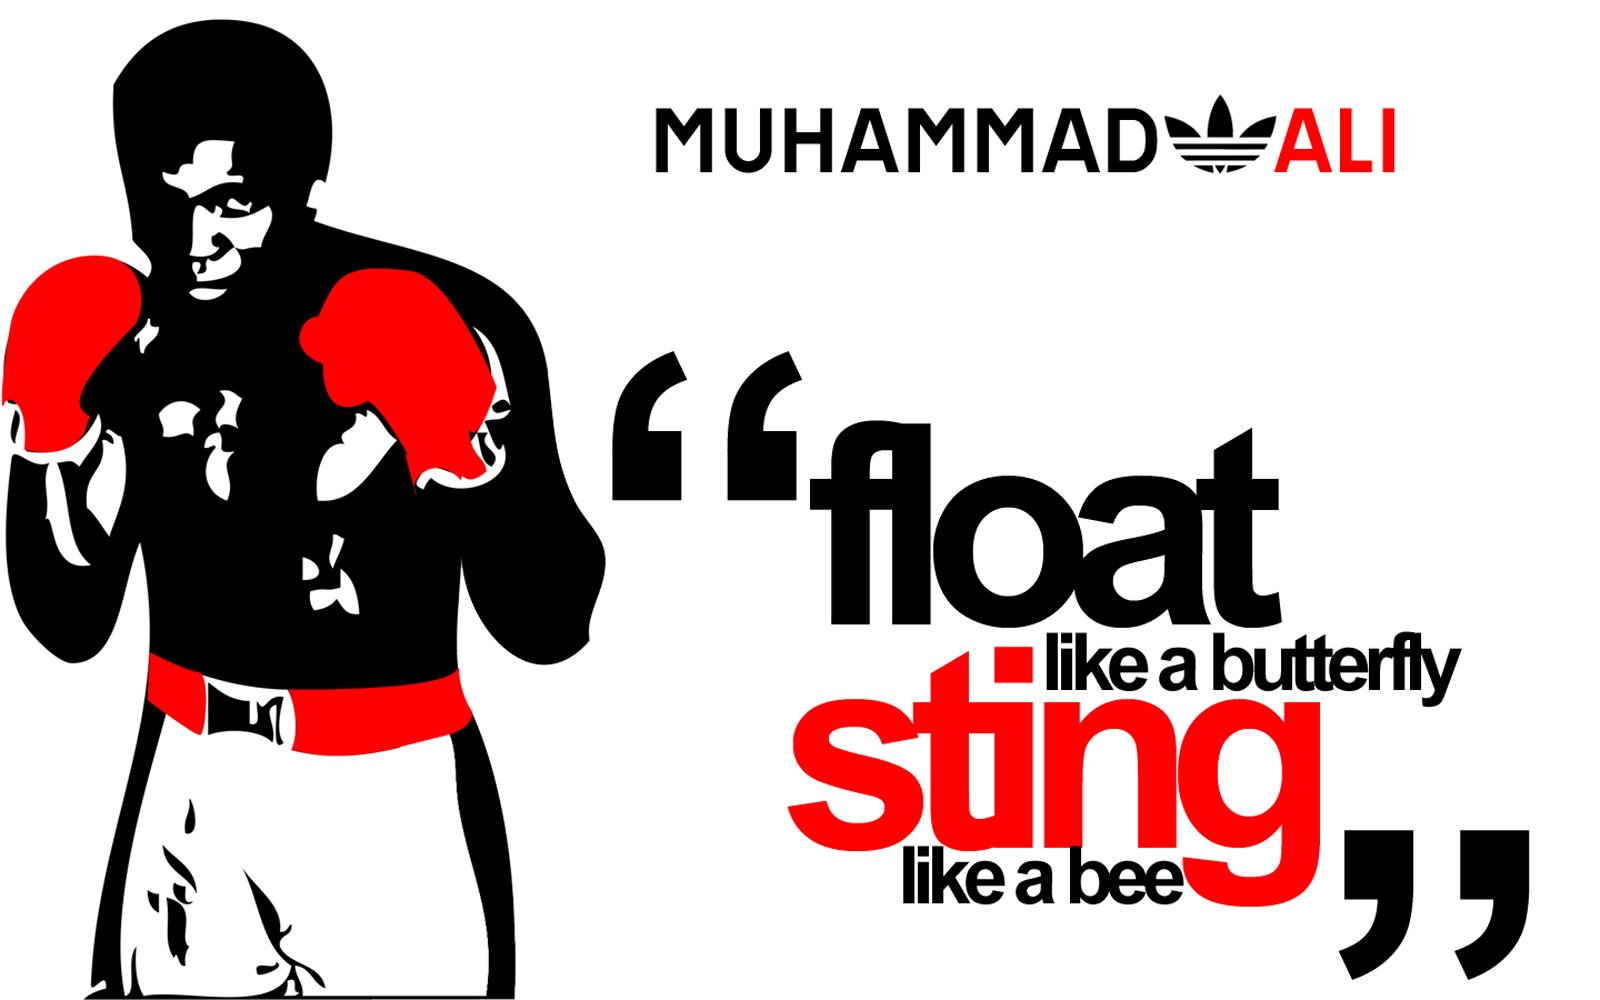 Muhammad Ali Quote Wallpaper Desktop 9274 Wallpaper Wallpaper 1600x1000